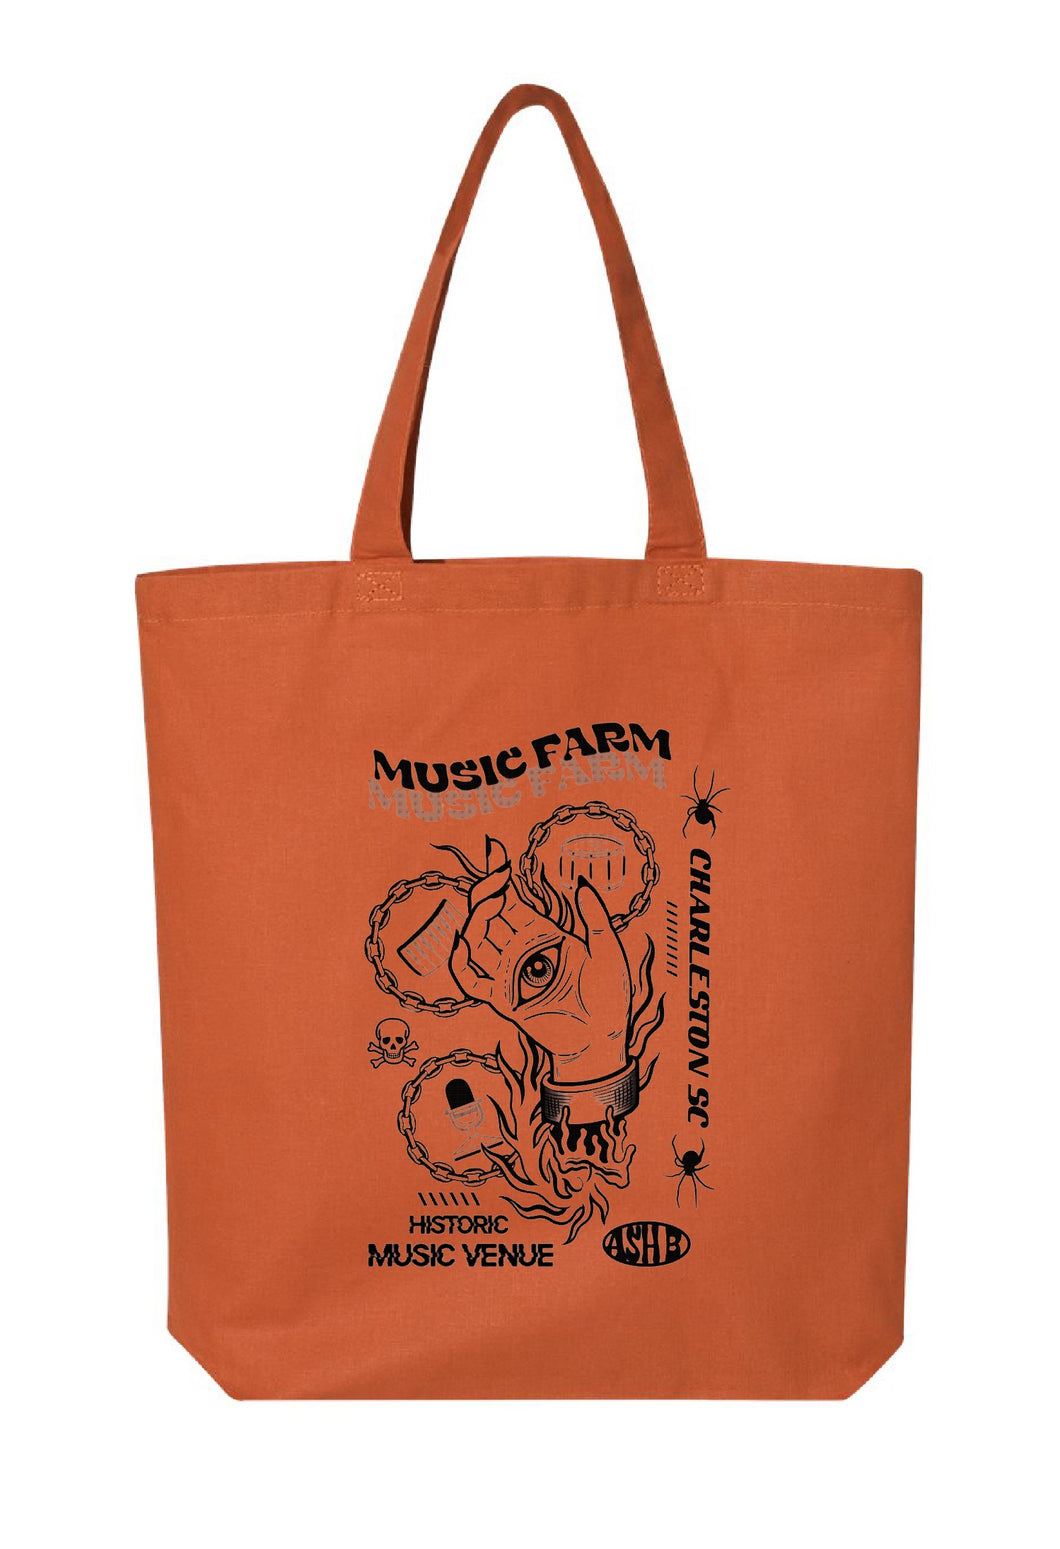 Music Farm Specialty Fall Tote Bag